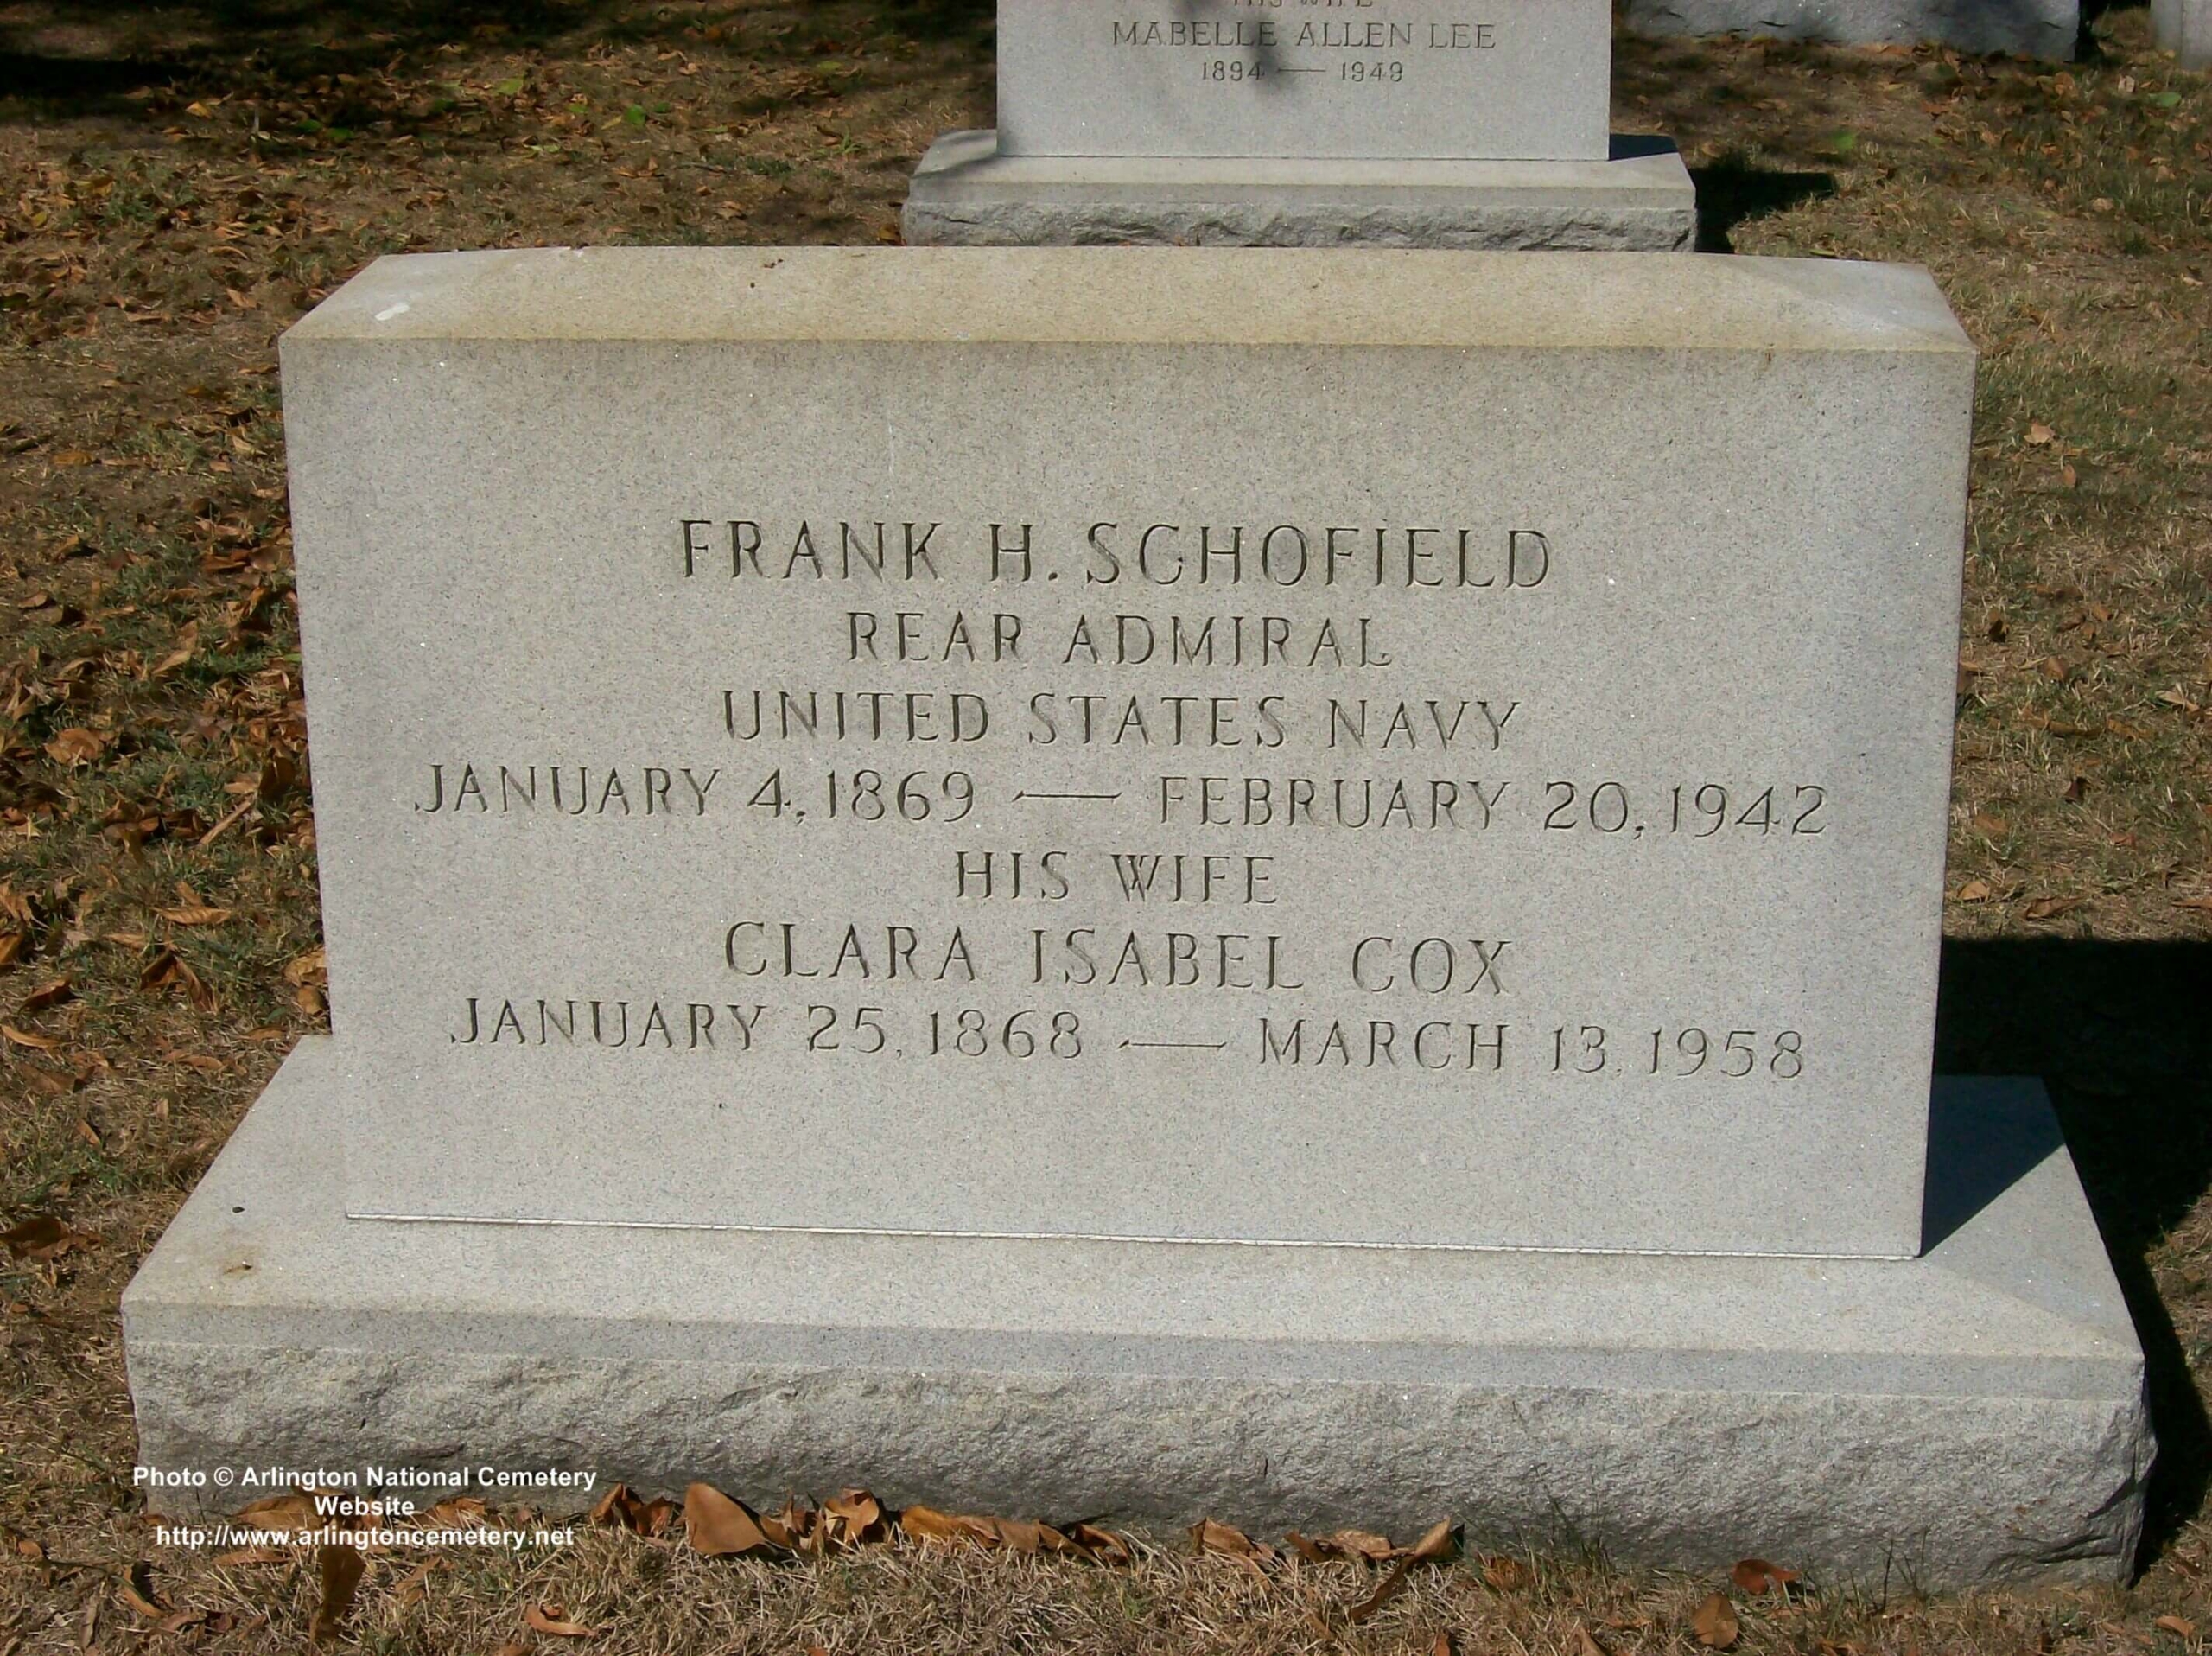 fhschofield-gravesite-photo-october-2007-001